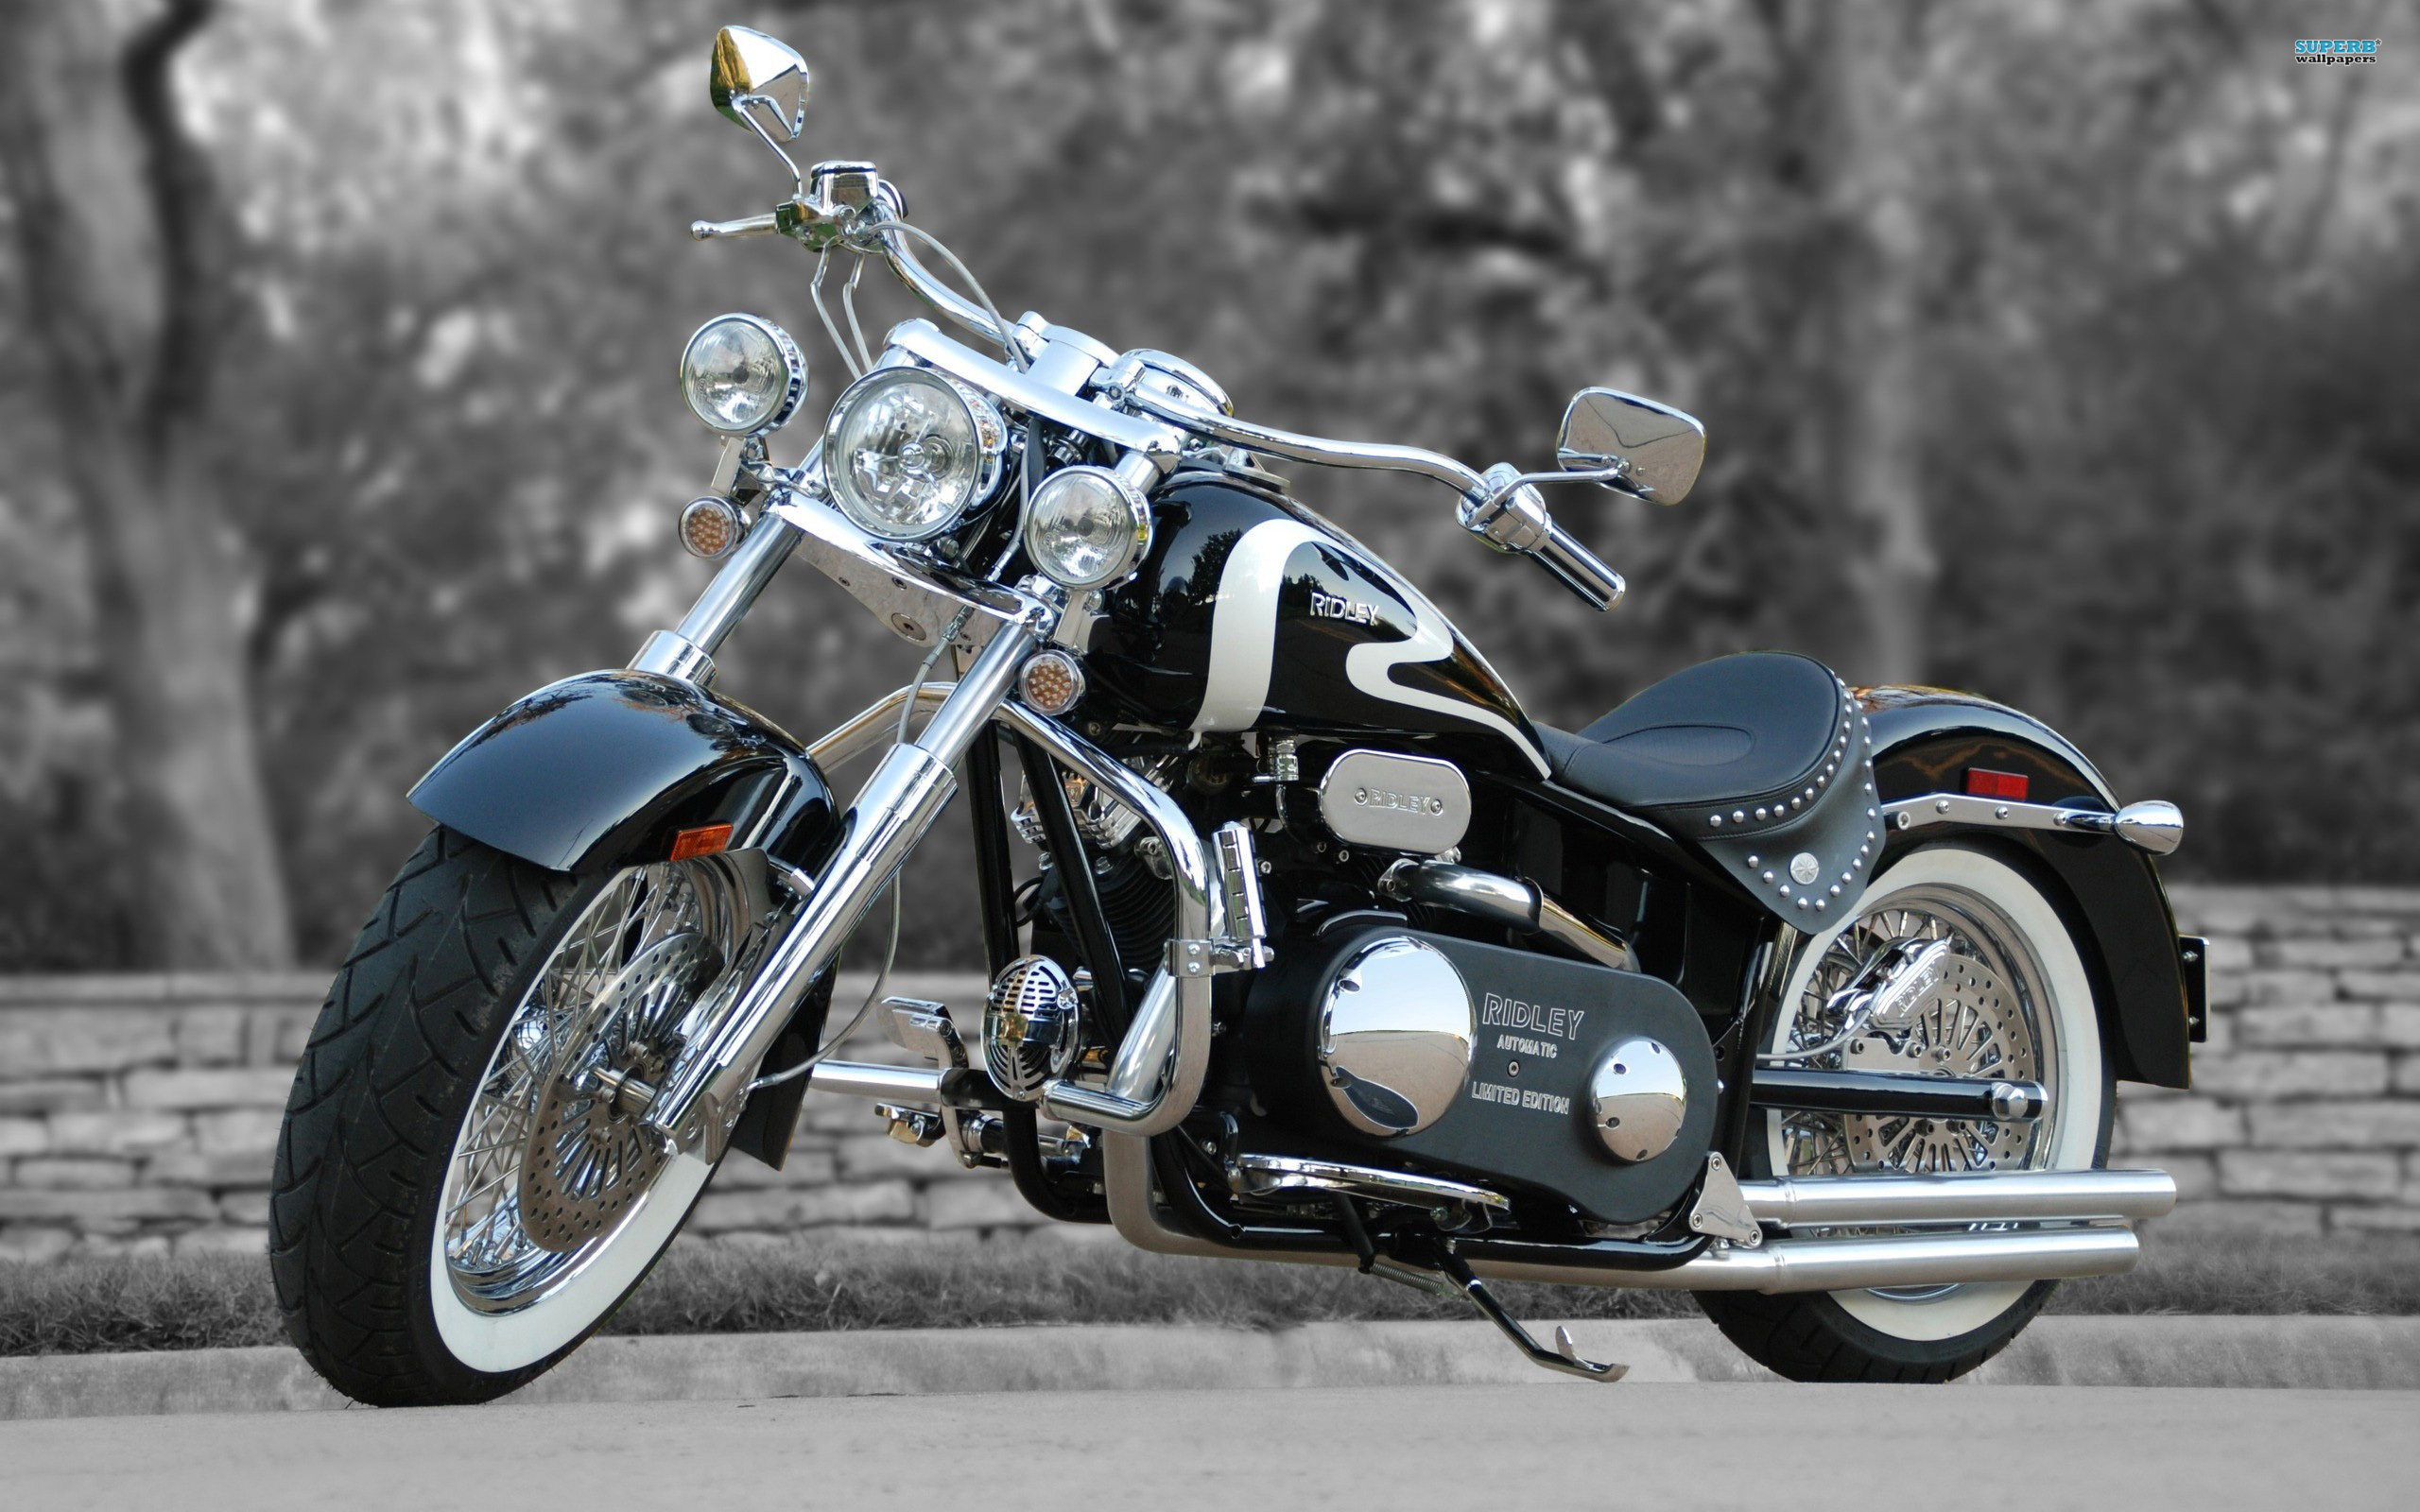 Harley Davidson E Girls Ridley Chopper Motorcycle 897778 25601600